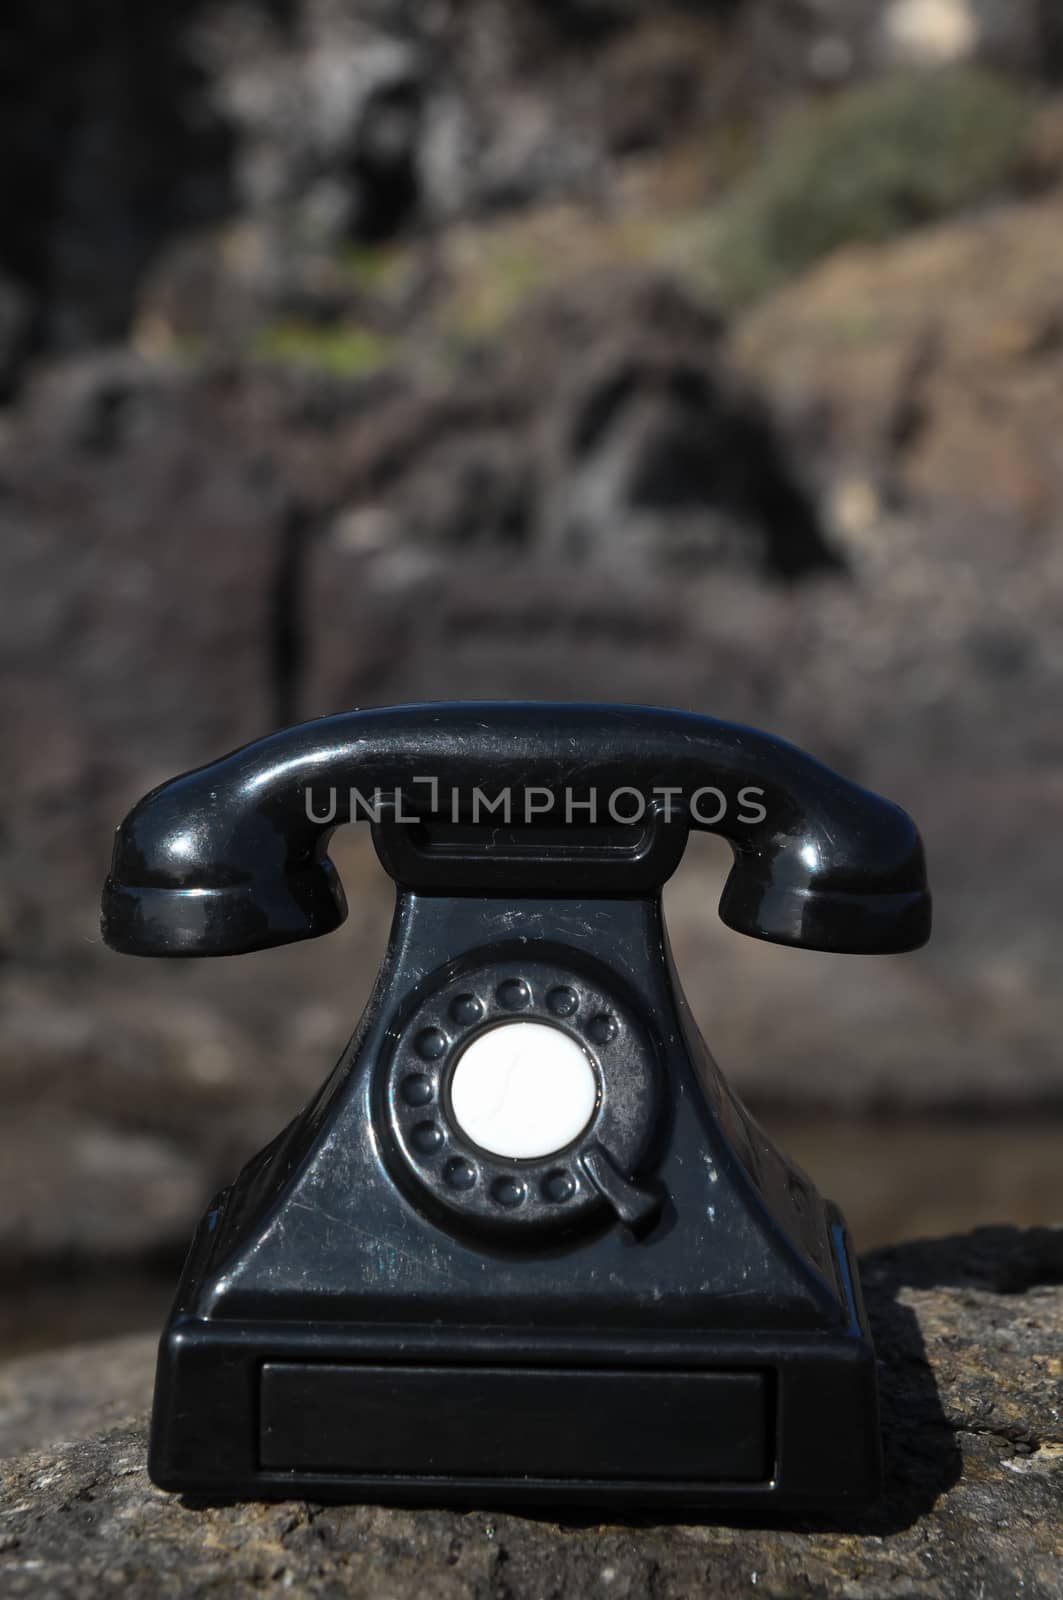 International Communications Vintage Telephone Toy on the Volcanic Rocks